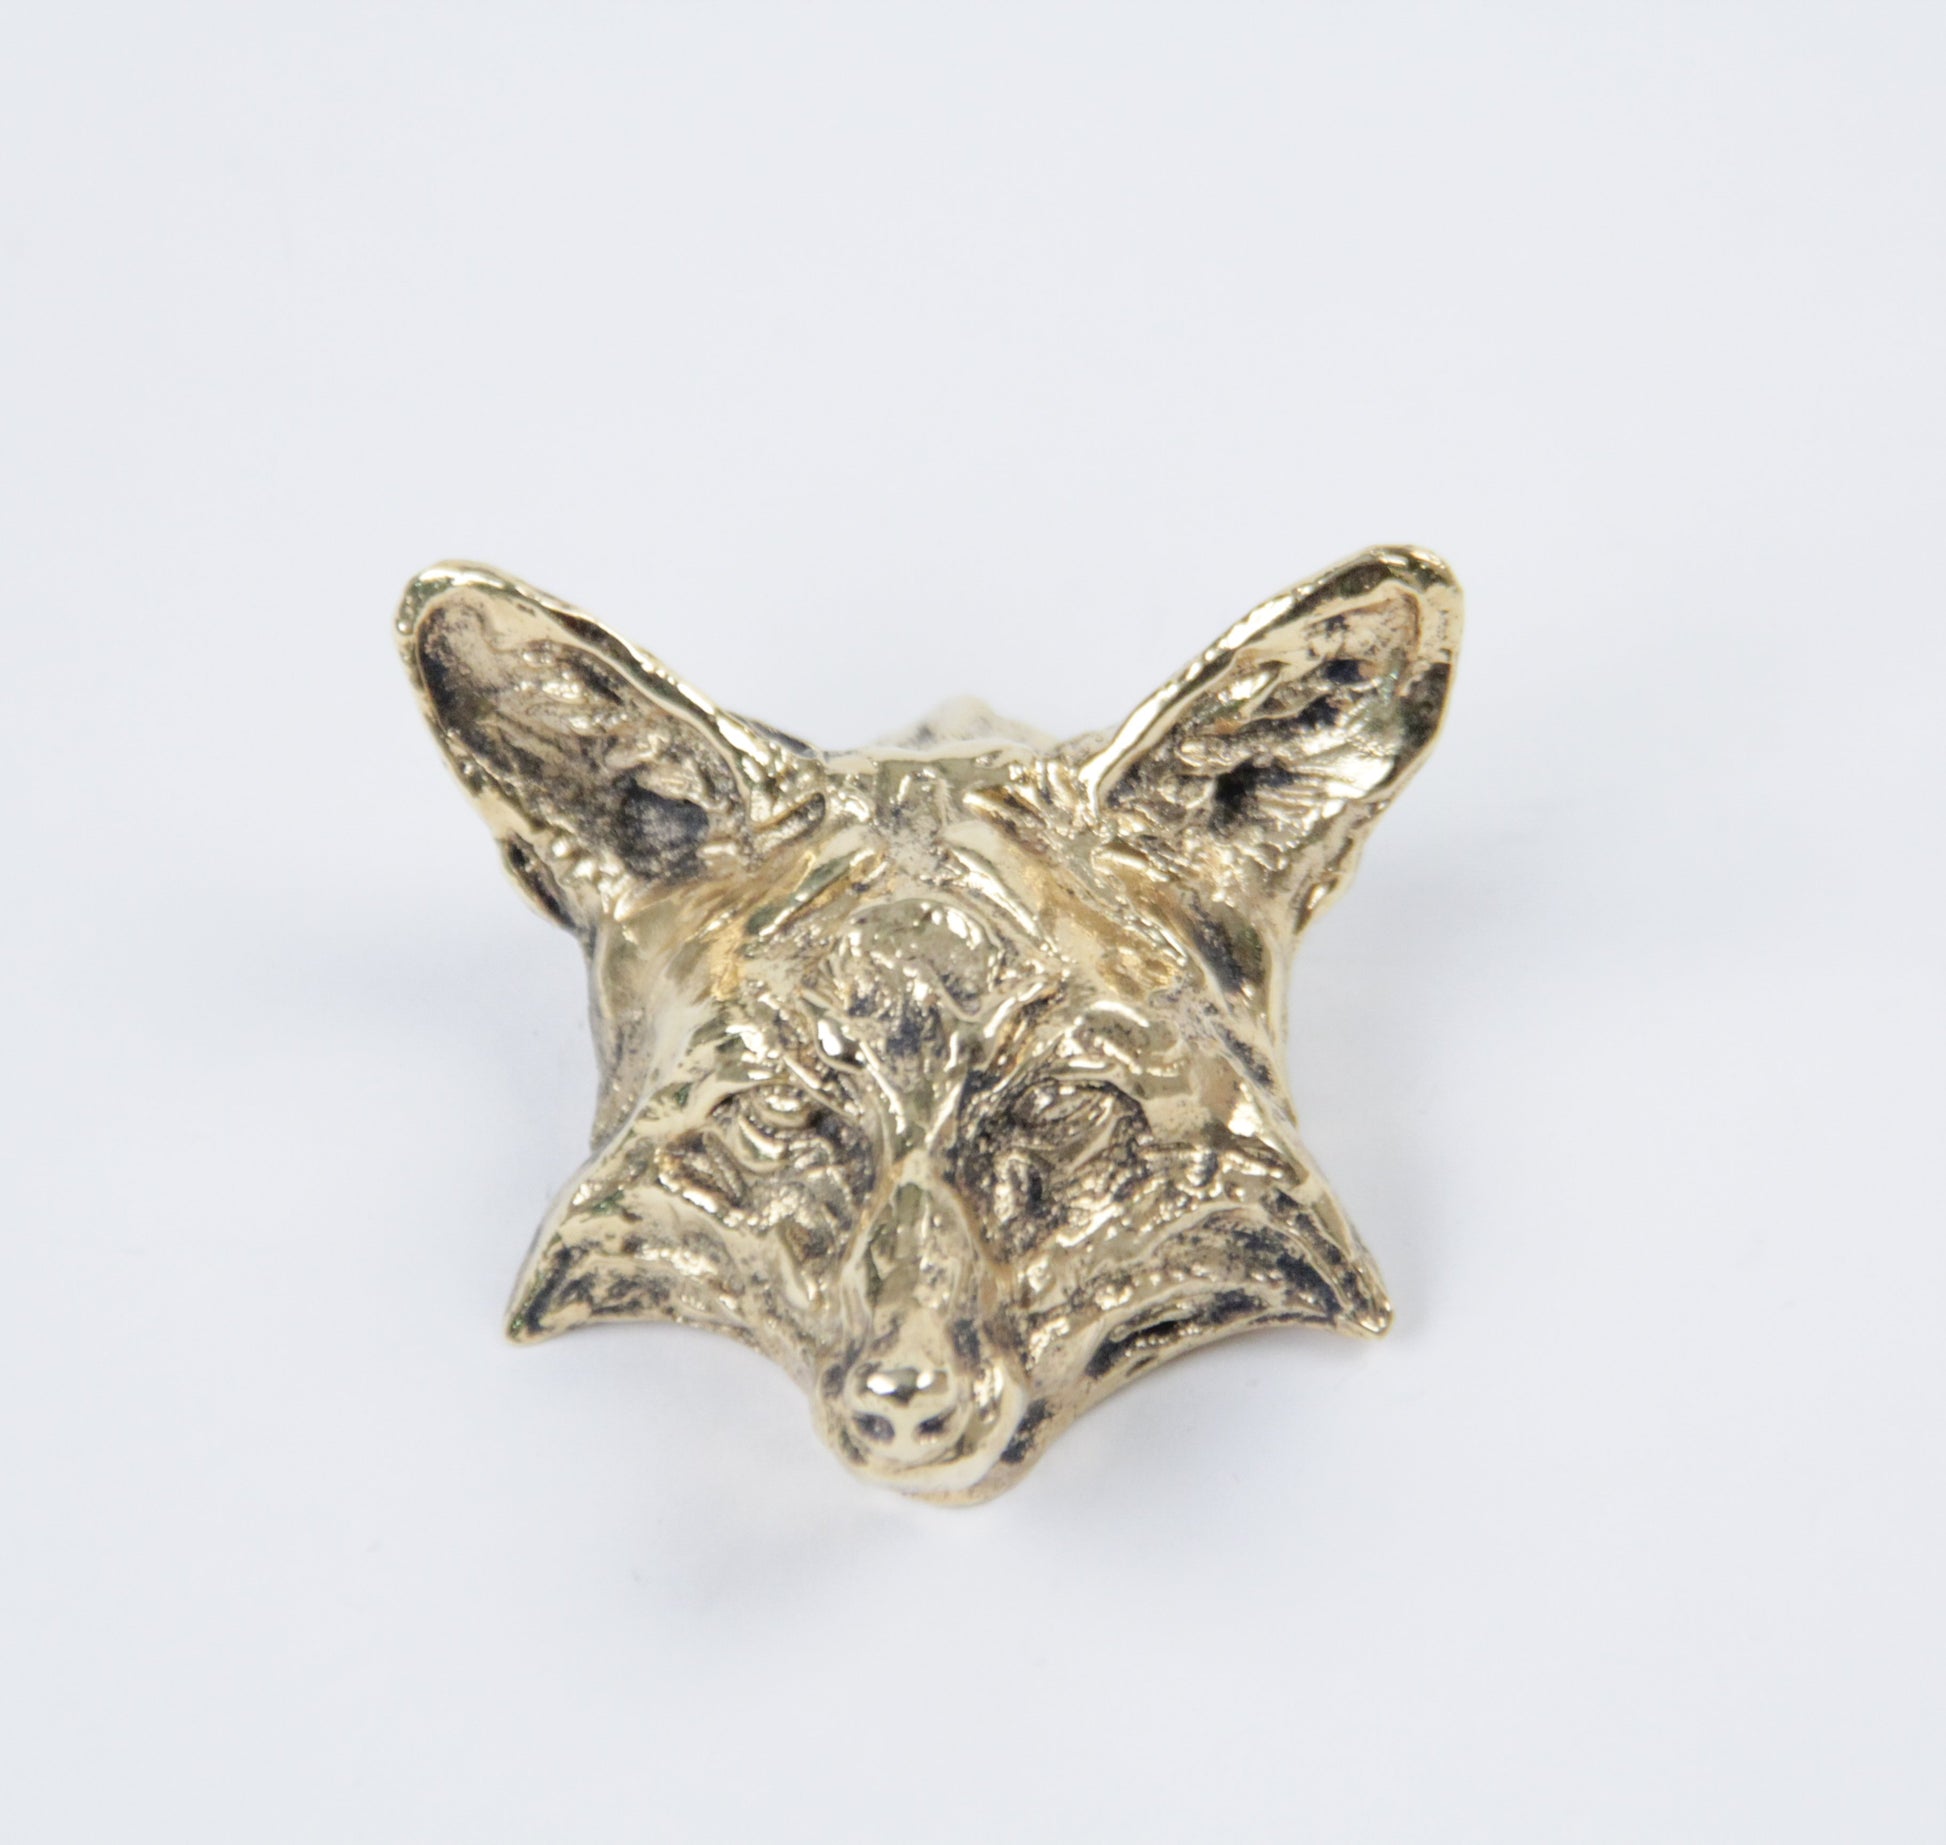 2010 Prix de West collector's bolo red fox by richard loffler gold